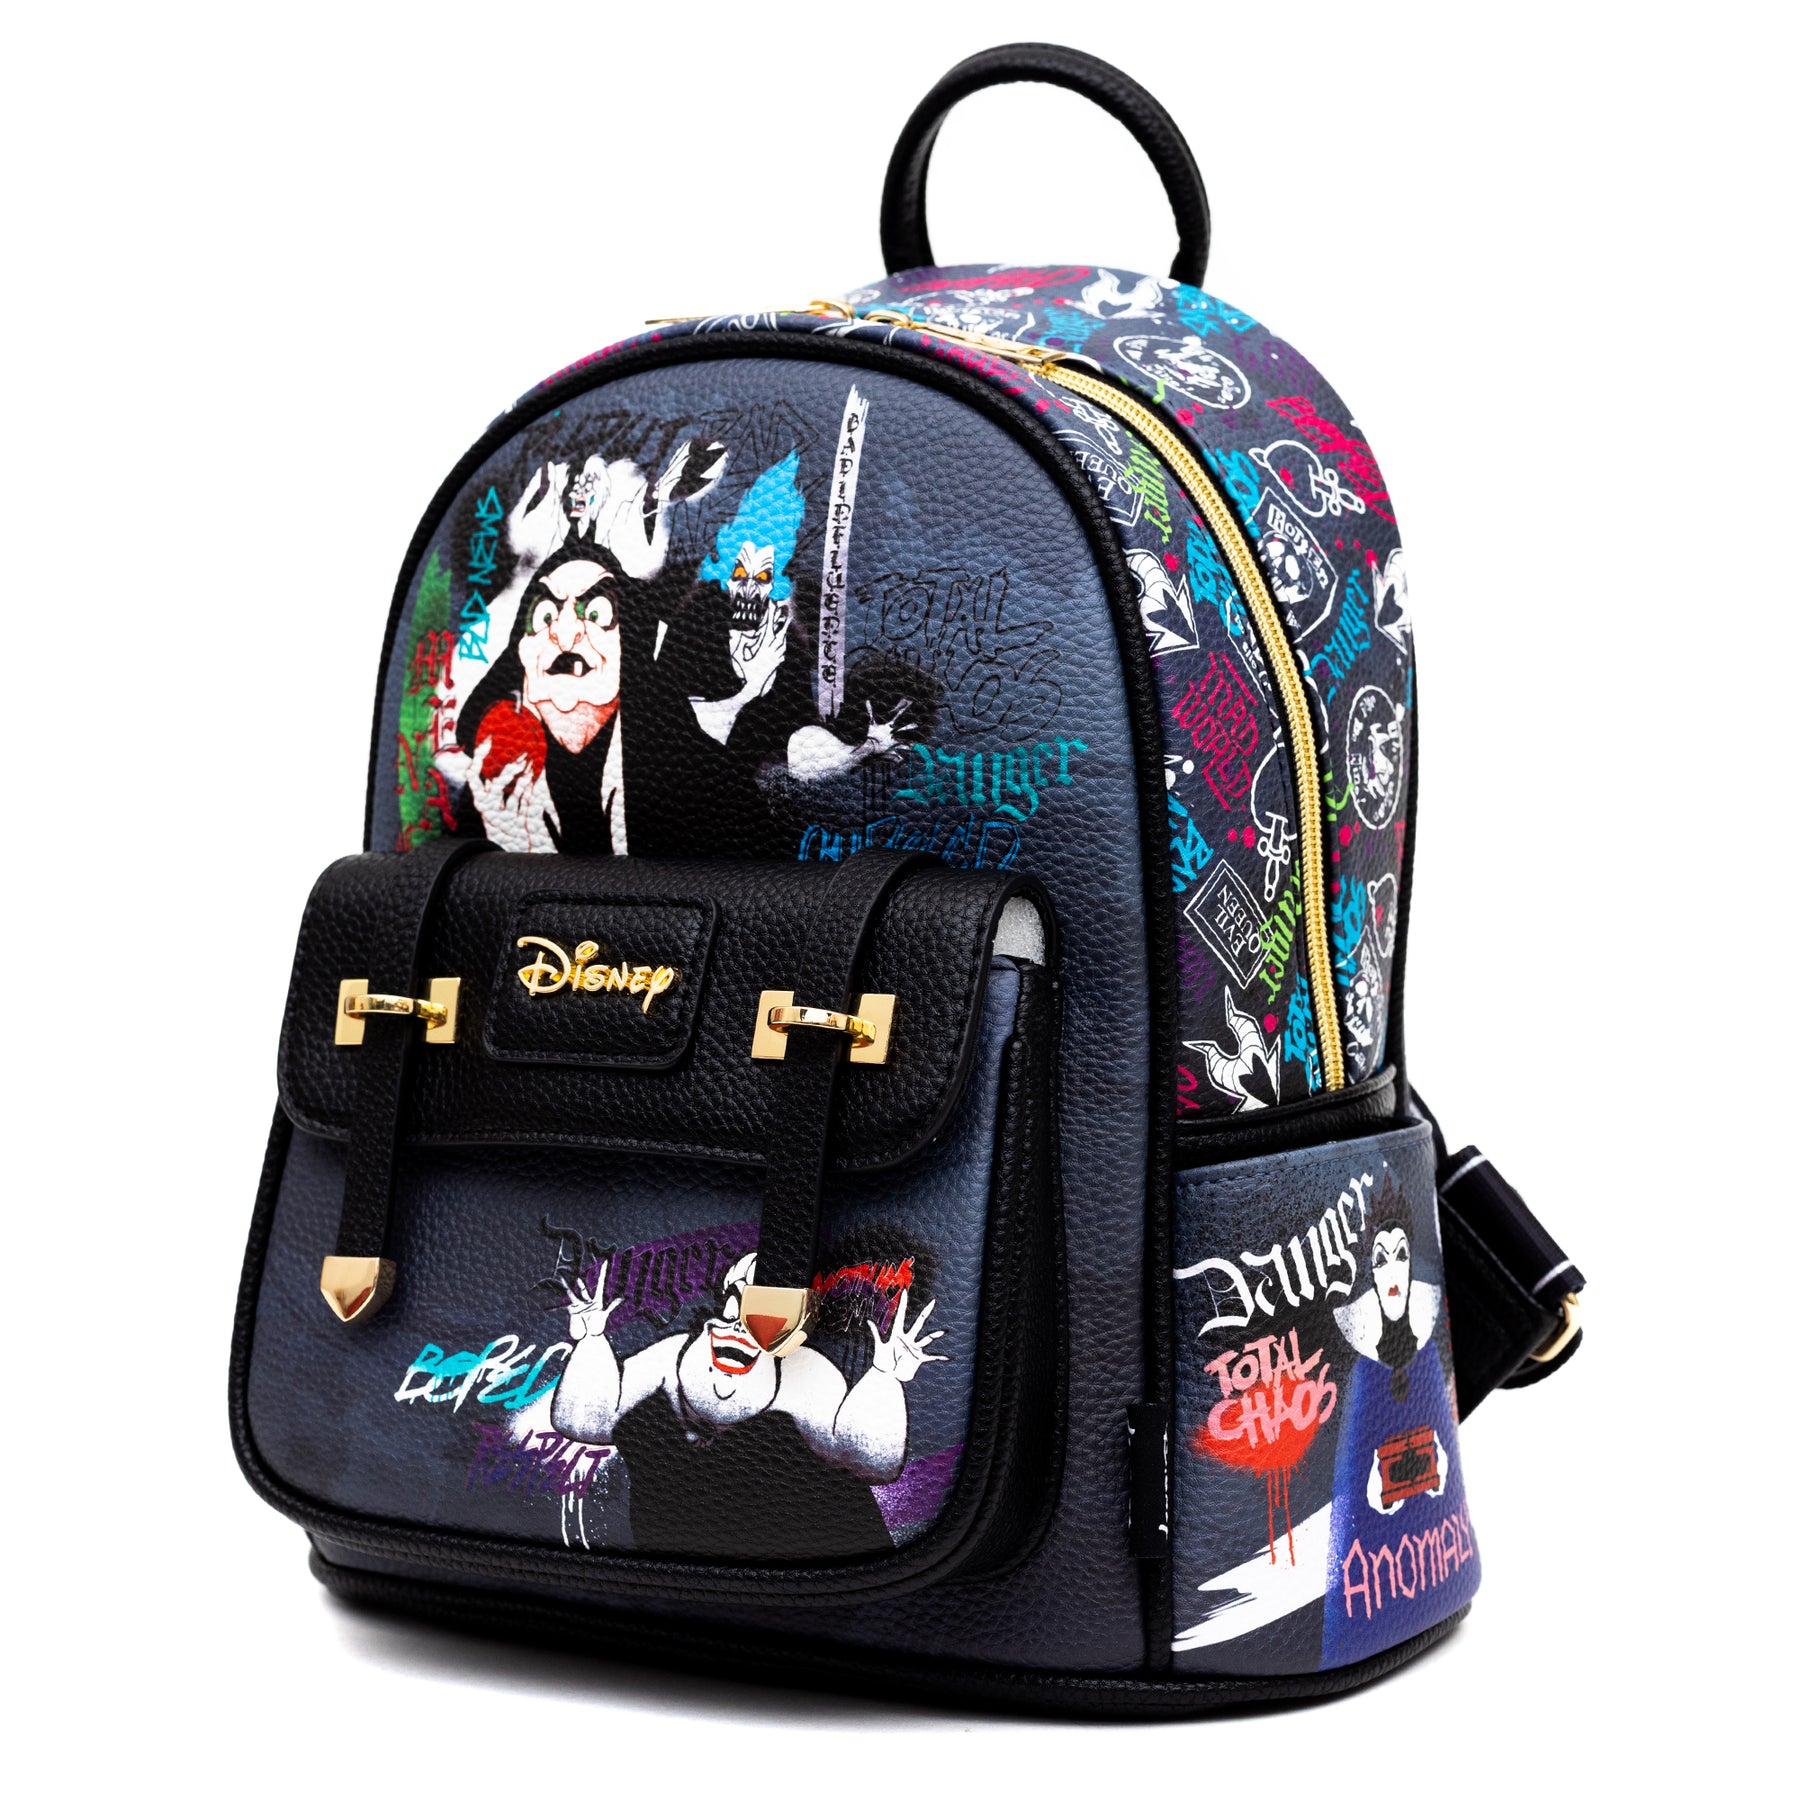 WondaPop Disney Villains Maleficent Dragon Mini Backpack – 707 Street